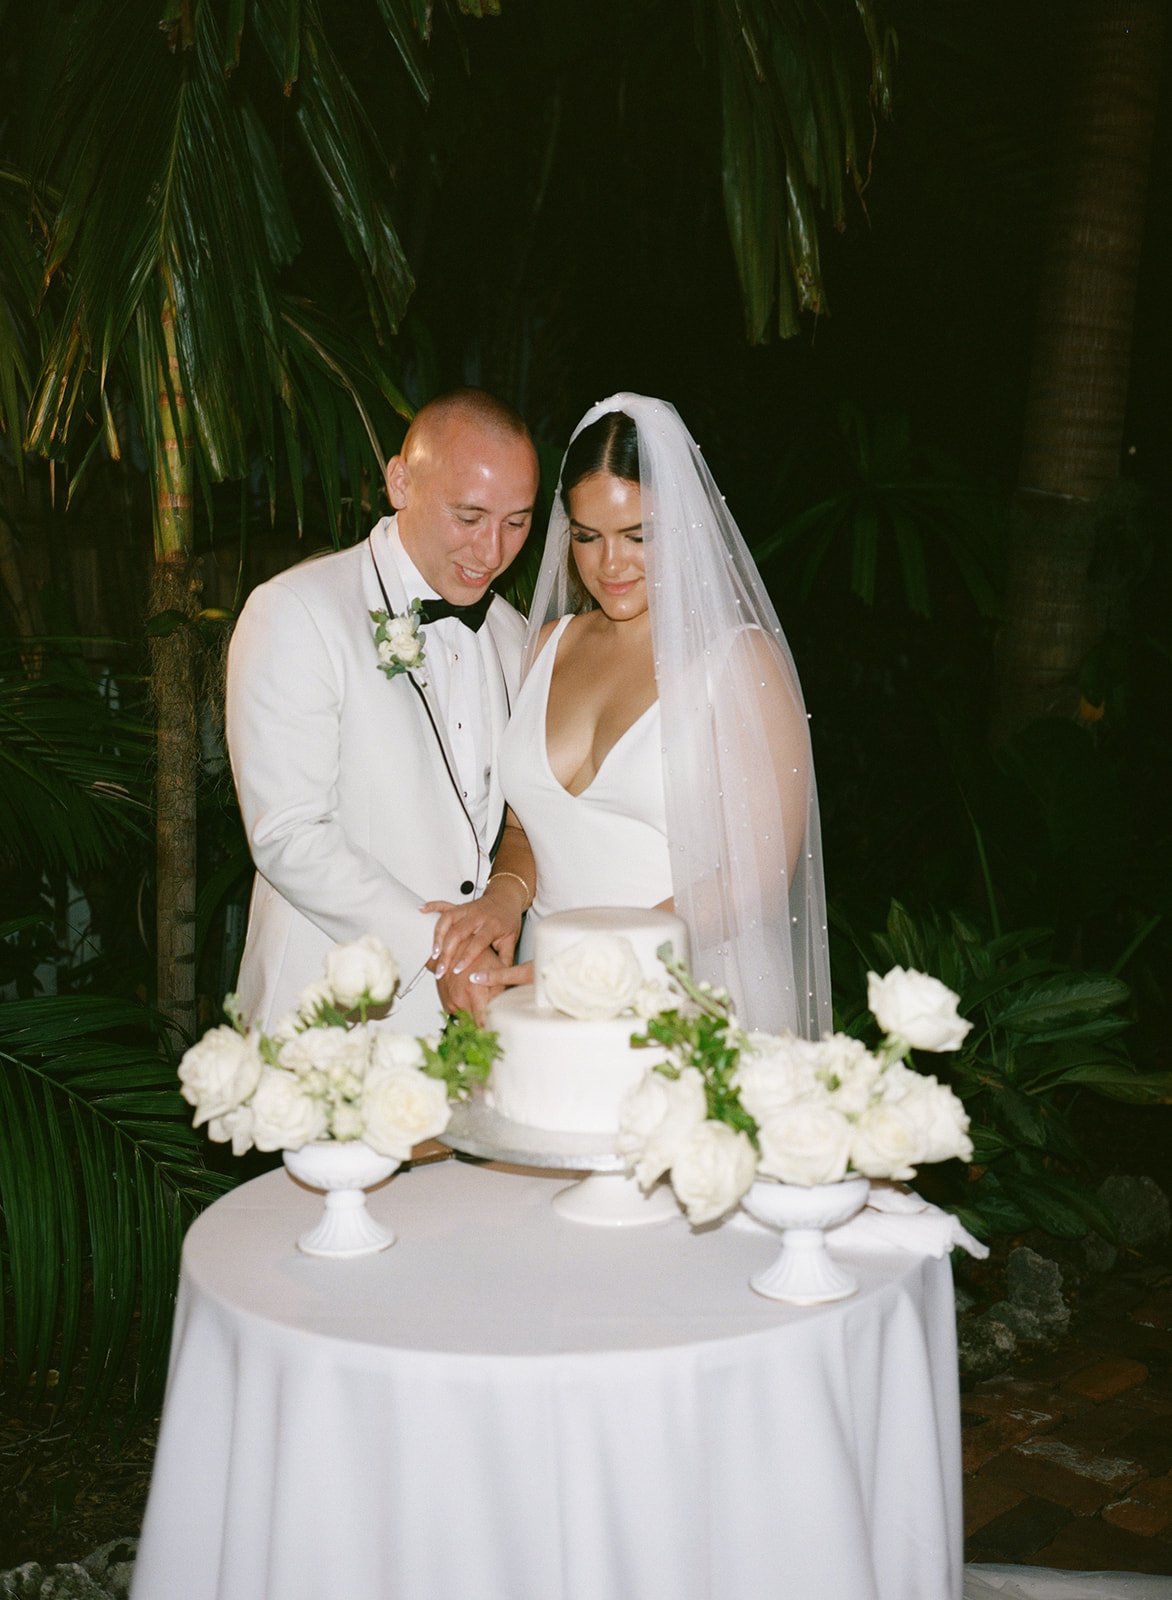 3 AUDUBON HOUSE KEY WEST - KEY WEST WEDDING PLANNER - FLORIDA KEYS WEDDING PLANNER - RACHEL FOS BENNER -.jpg